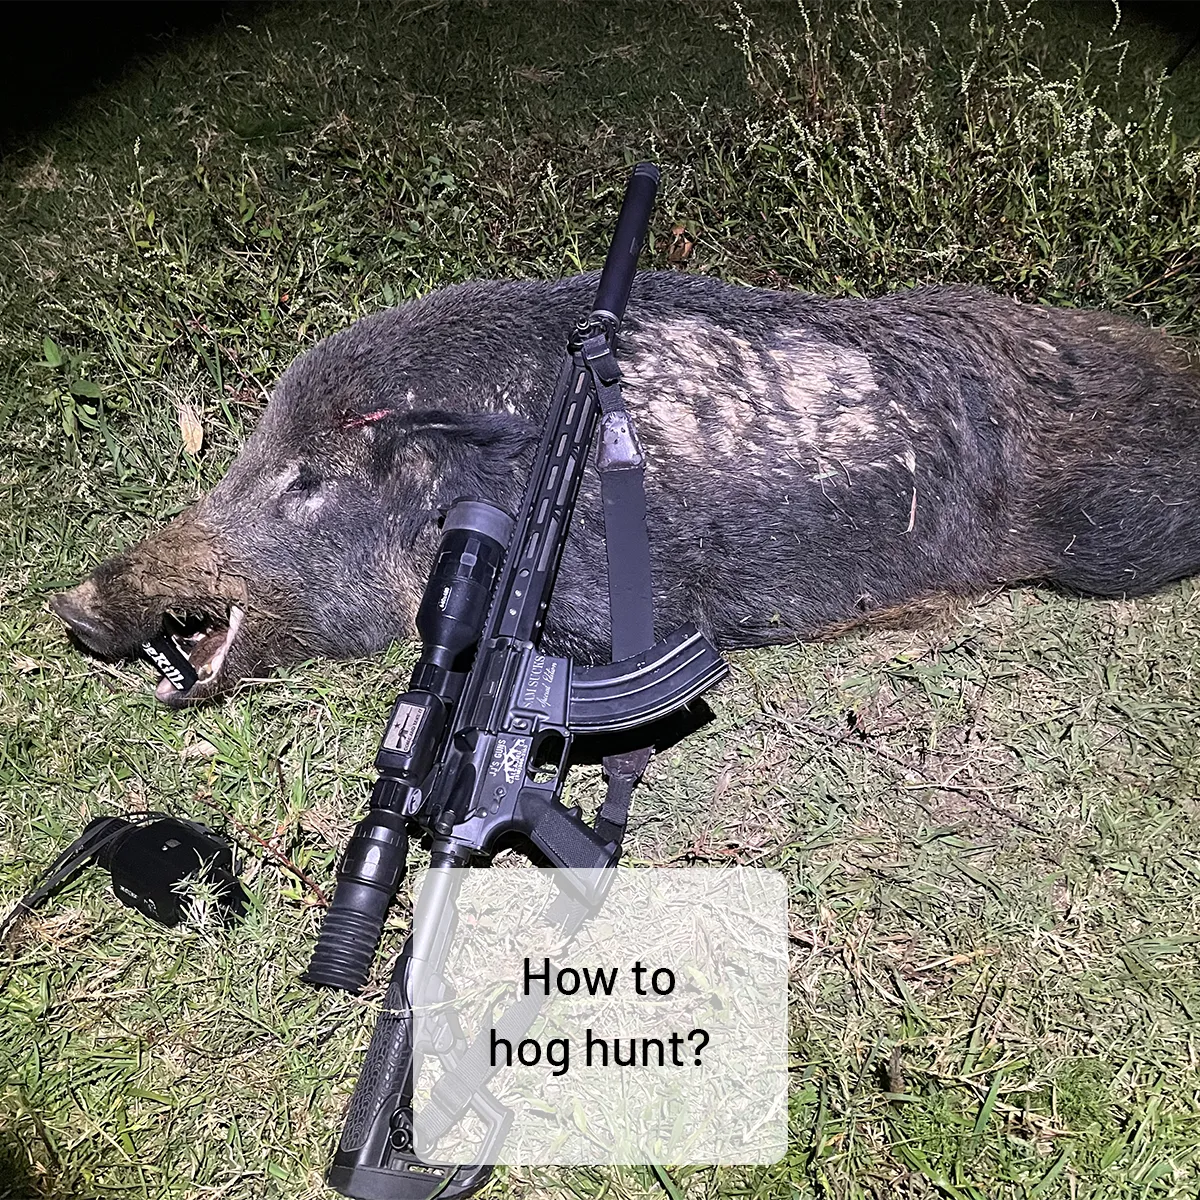 How to hog hunt?